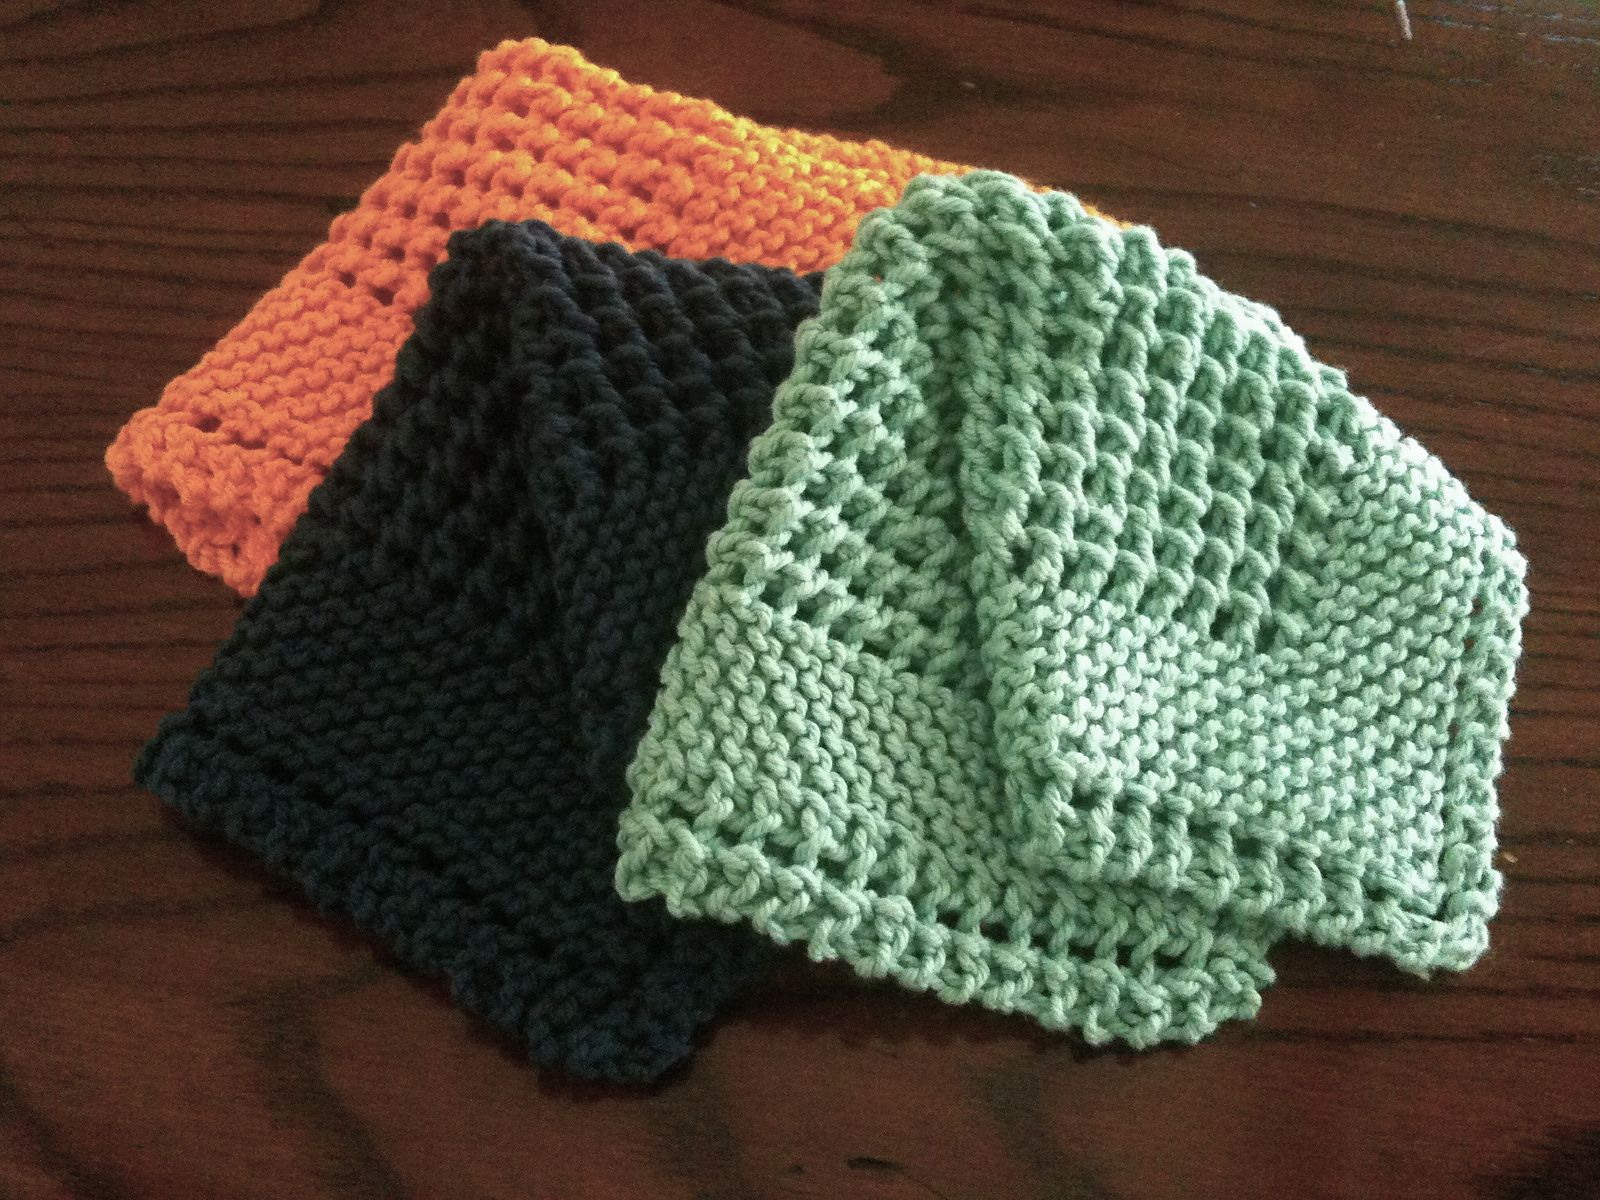 Heart Shaped Dishcloth Knitting Pattern 10 Knit Dishcloth Patterns For Beginners